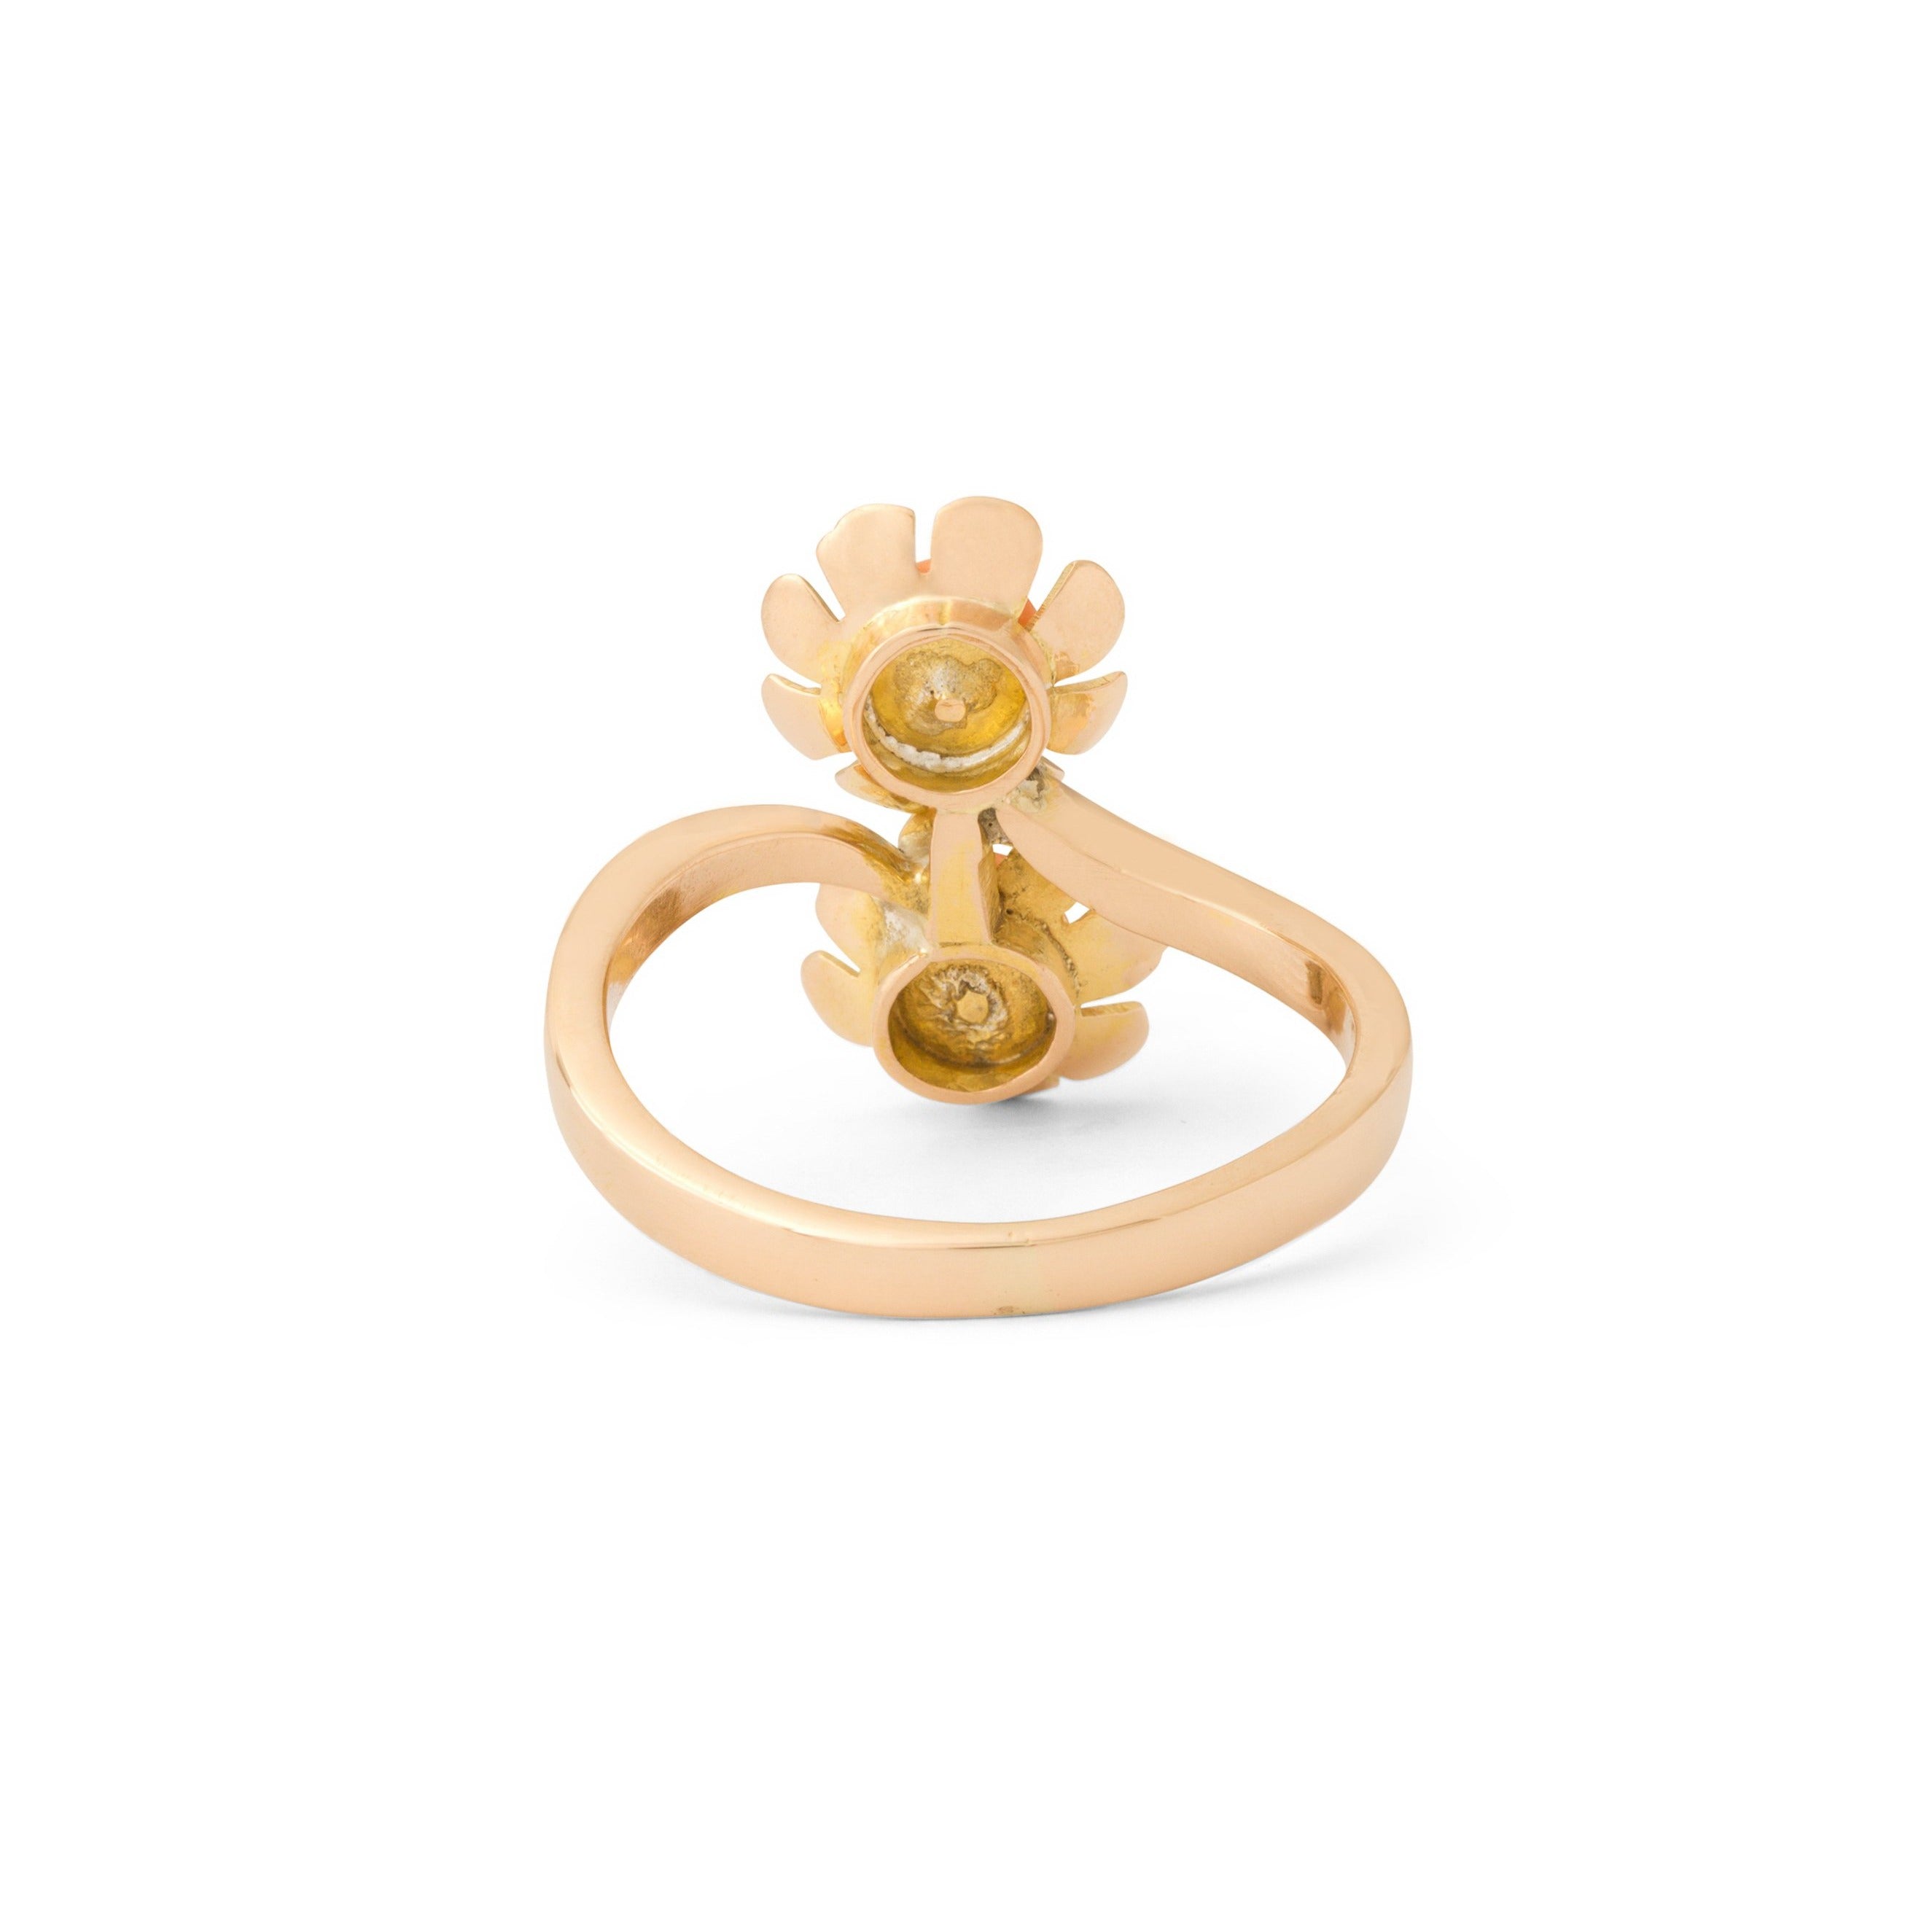 22k / 91,6% Gold Dubai / India Flower Ring size adjustable | Gold rings  jewelry, Gold ring designs, Gold jewelry simple necklace